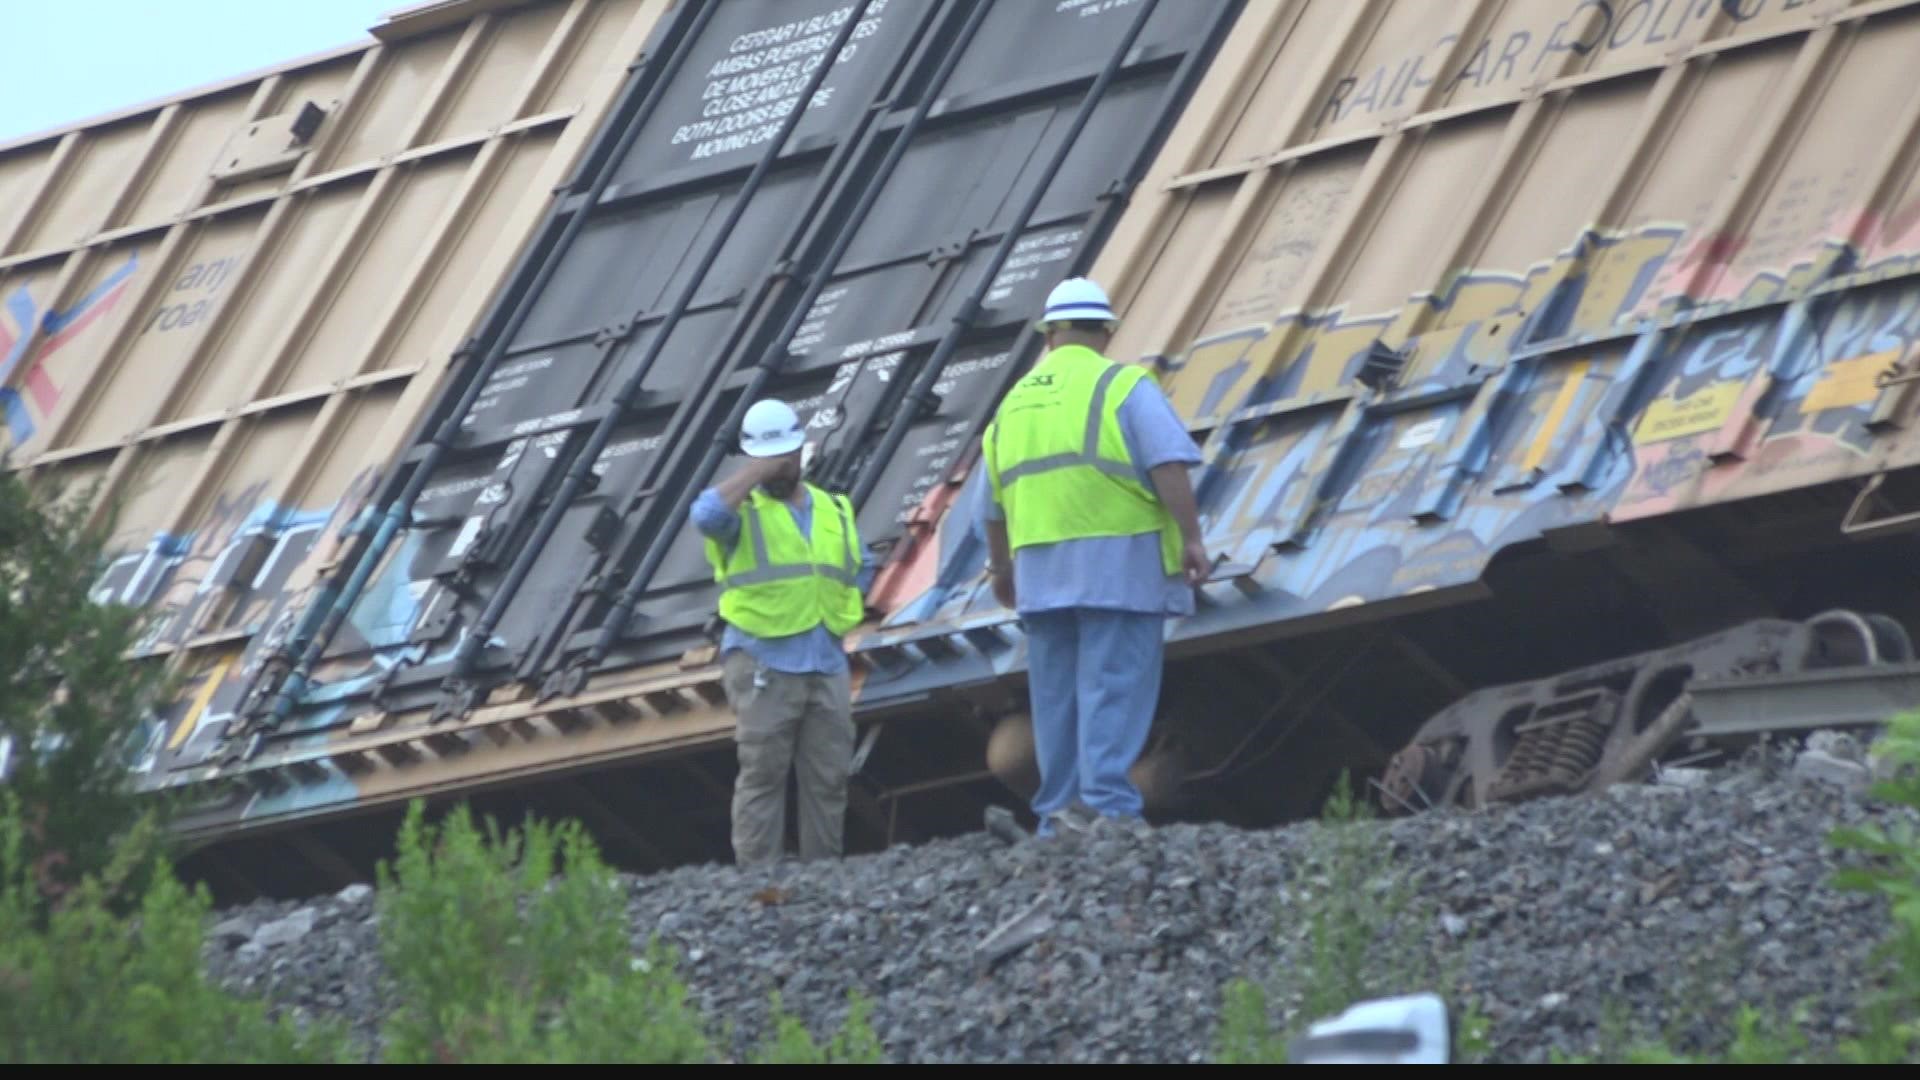 CSX Transportation said 19 railcars were involved.